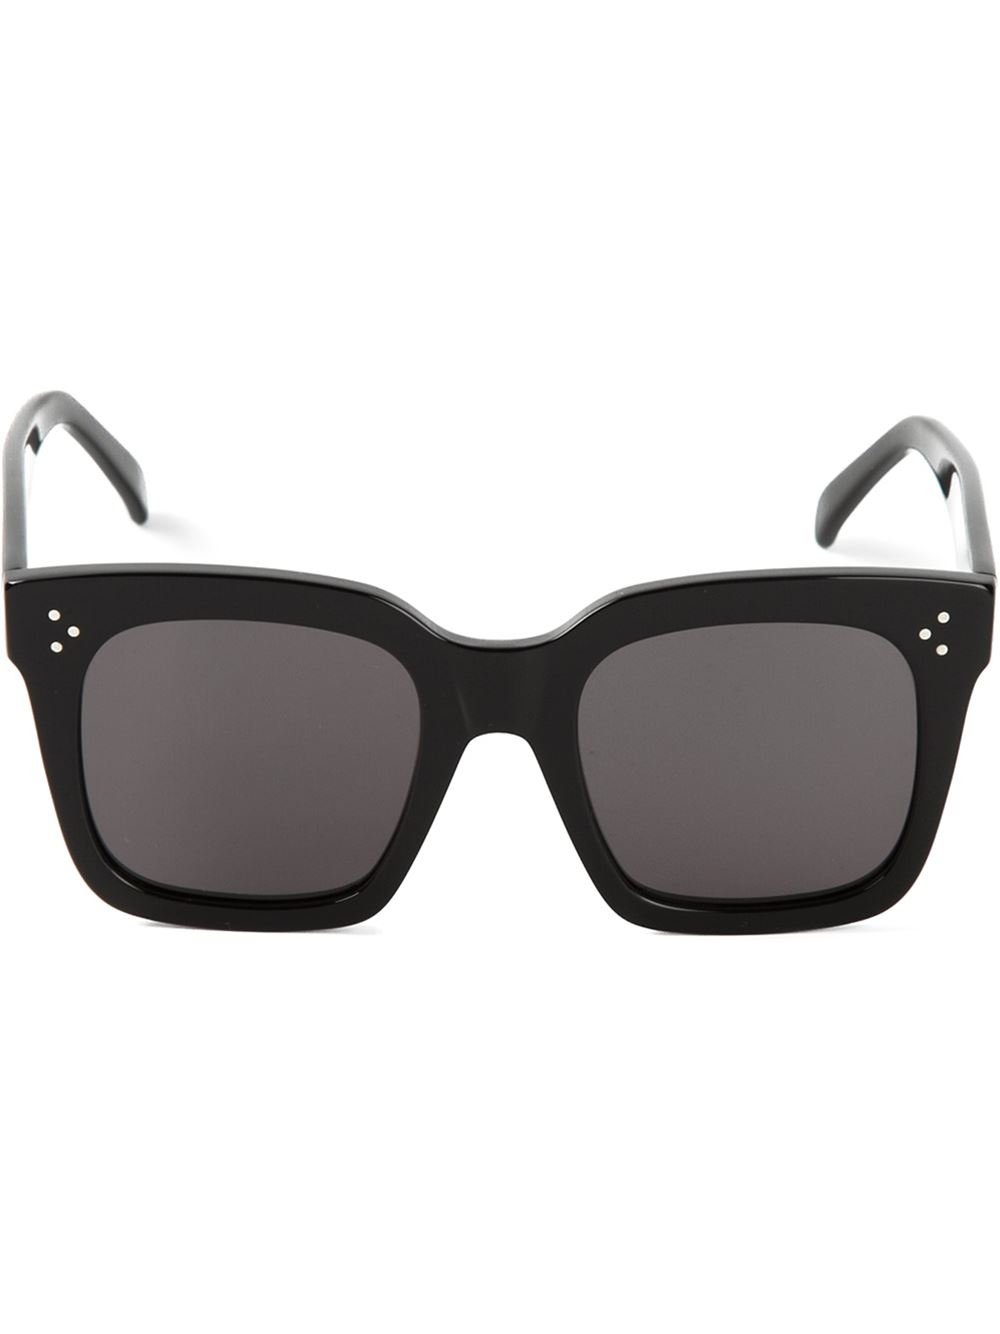 Celine 'Tilda' Sunglasses in Black - Lyst